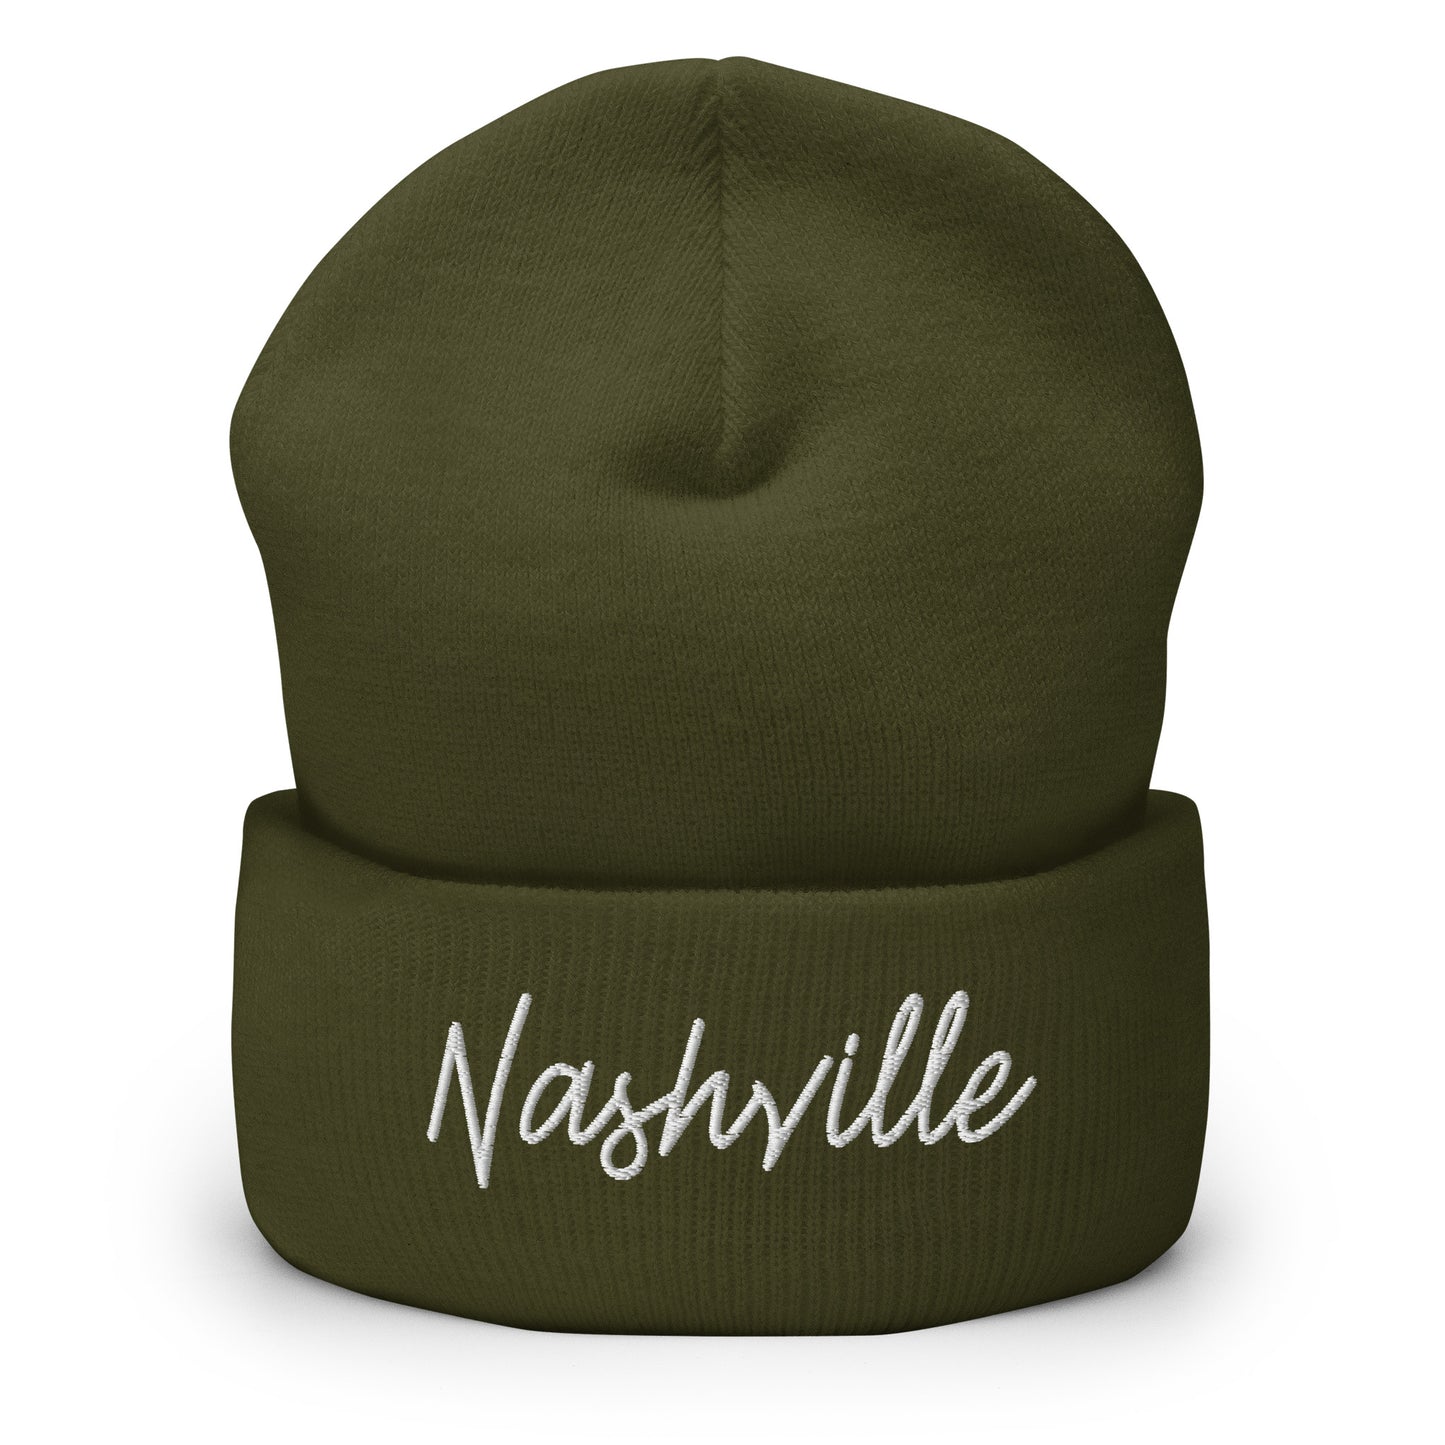 Nashville Retro Script Cuffed Beanie Hat